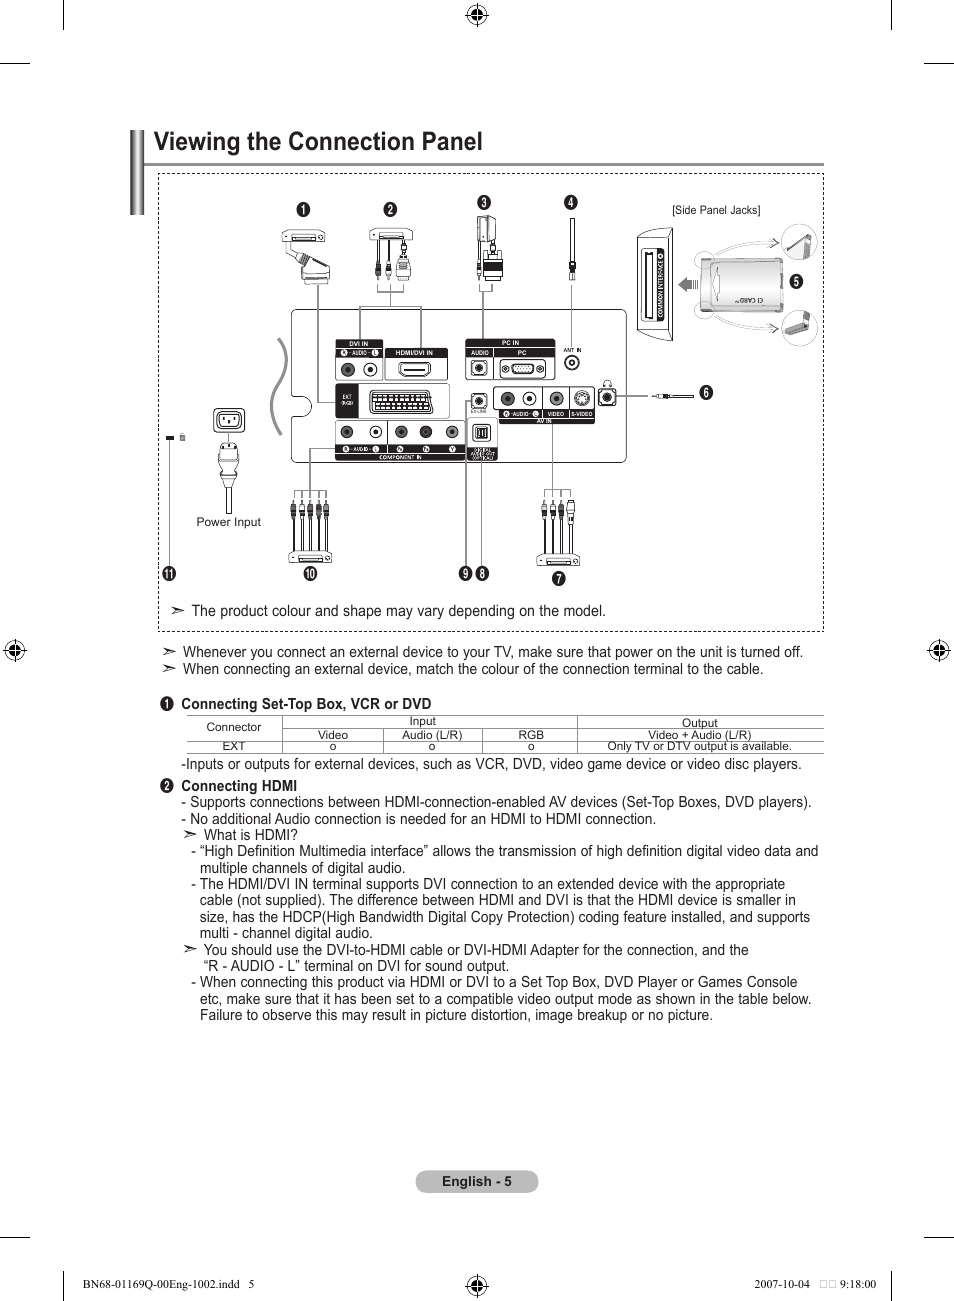 Viewing the connection panel | Инструкция по эксплуатации Samsung LE19R86BD | Страница 7 / 117